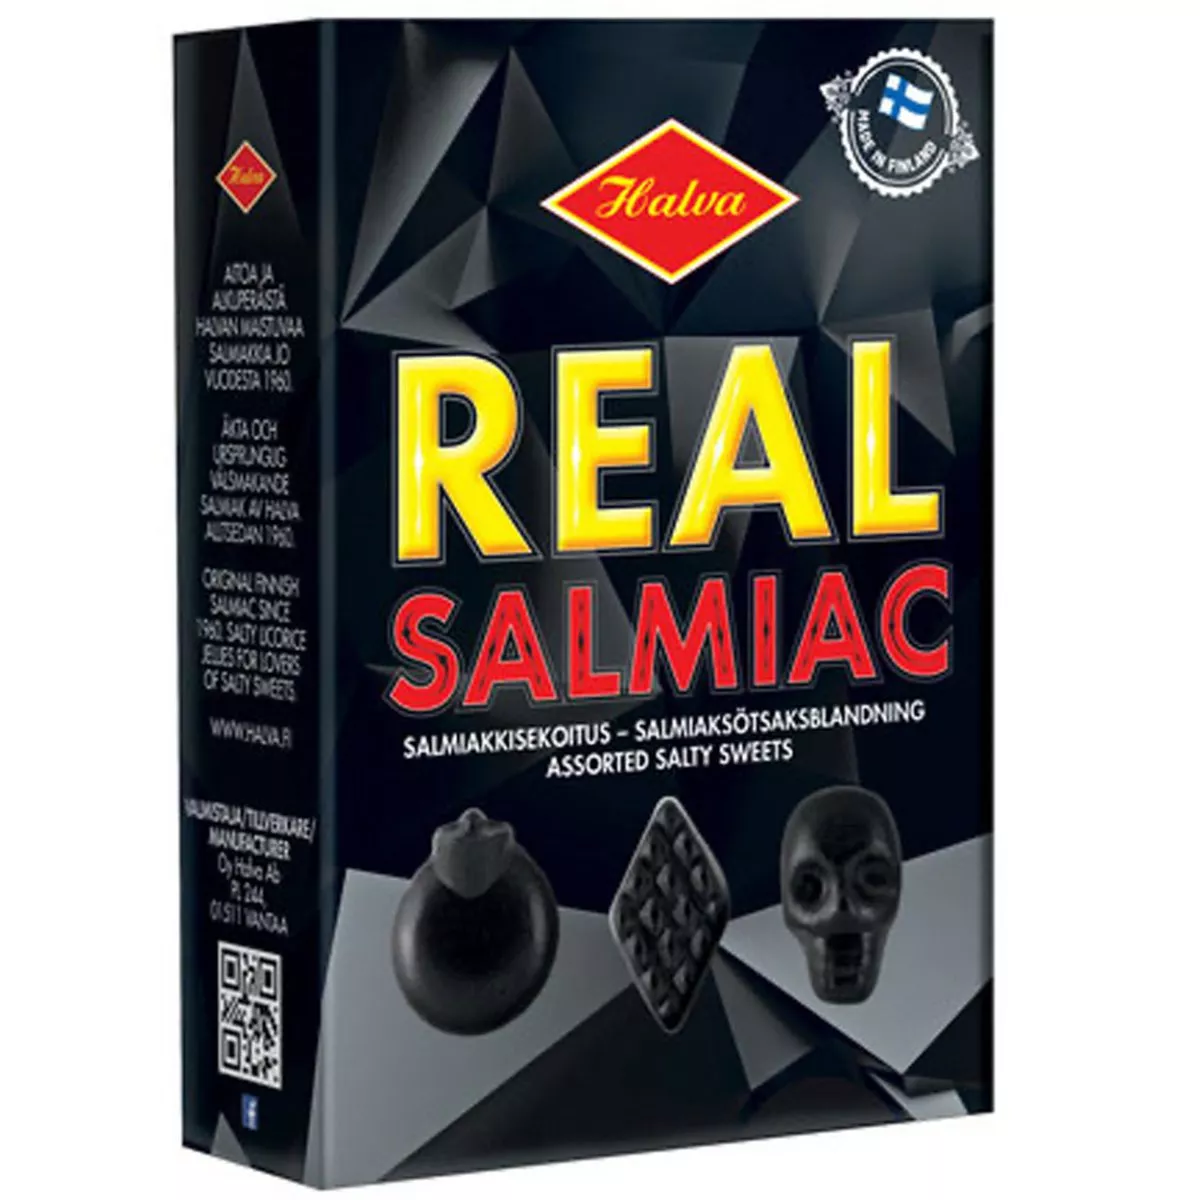 Halva Real Salmiac Box (230g) 1